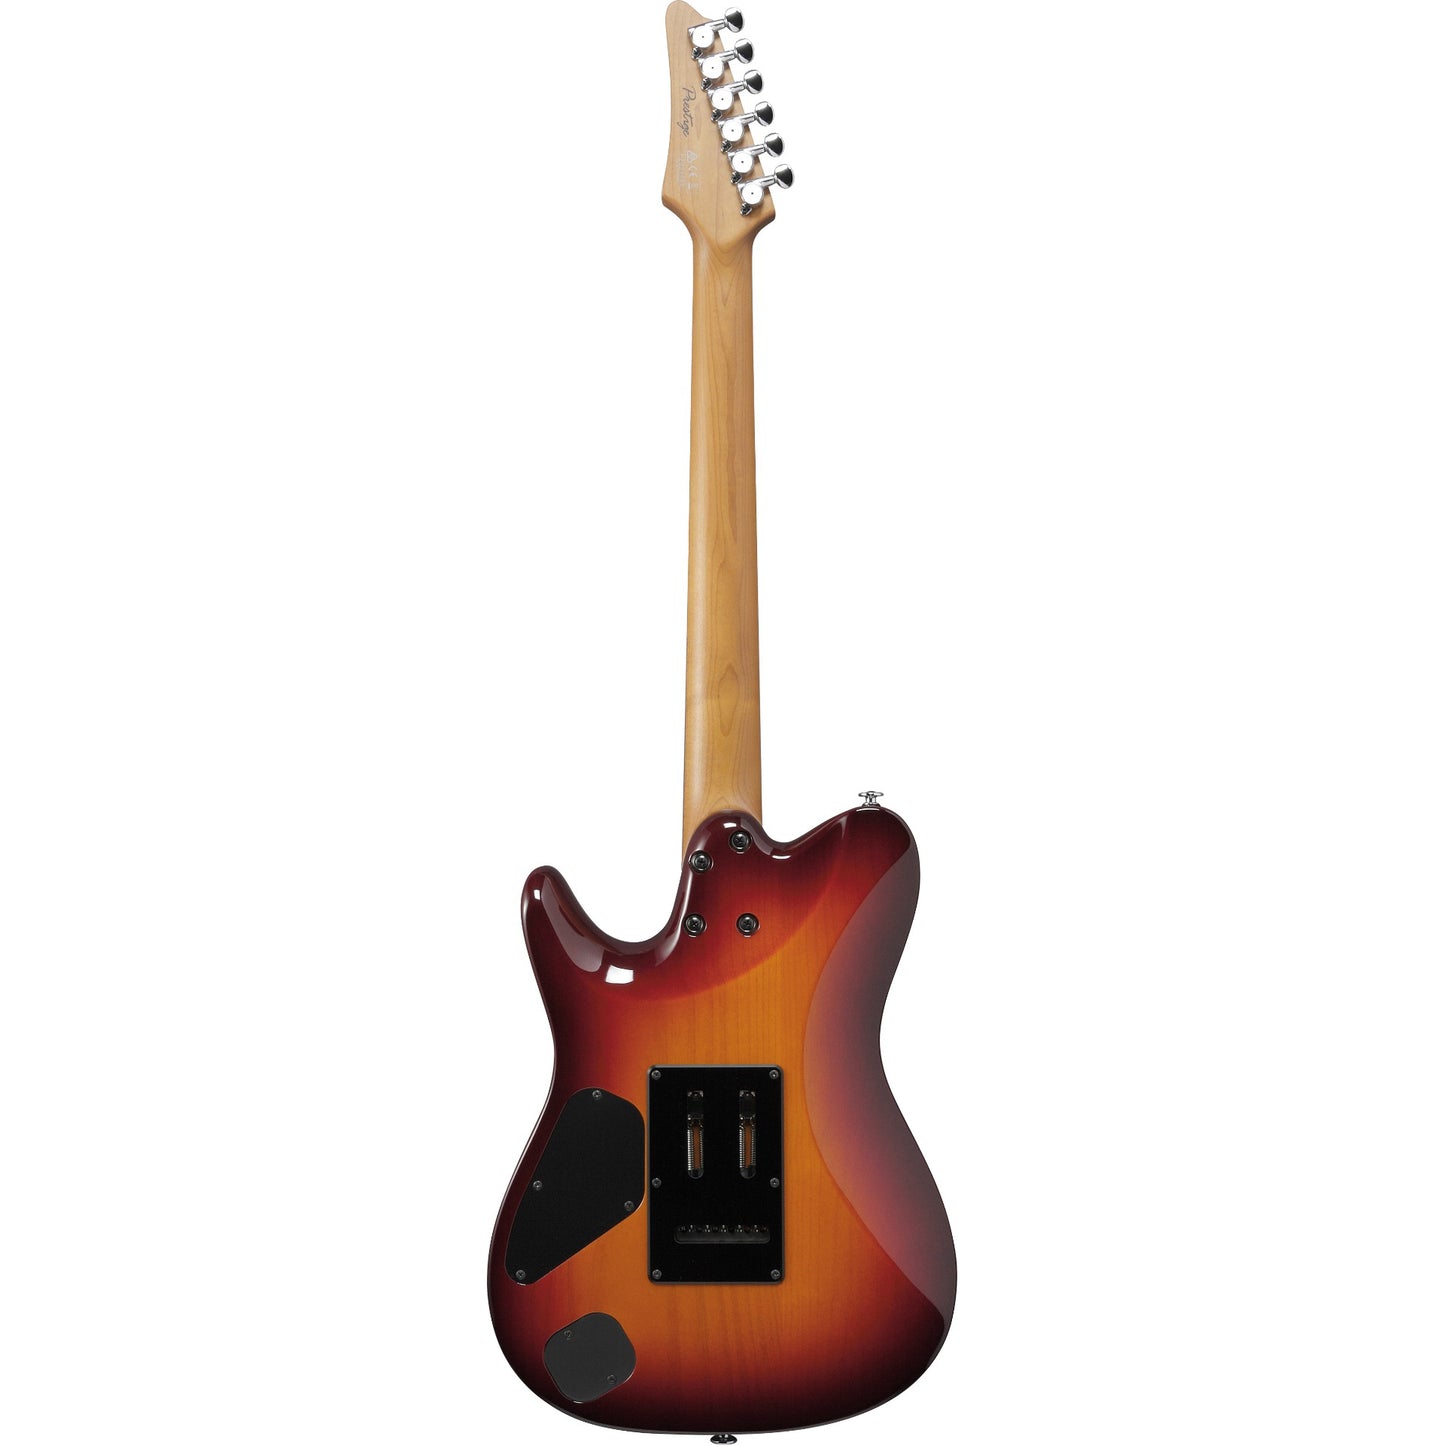 Ibanez AZS2200F STB Prestige 6 String Electric Guitar in Sunset Burst